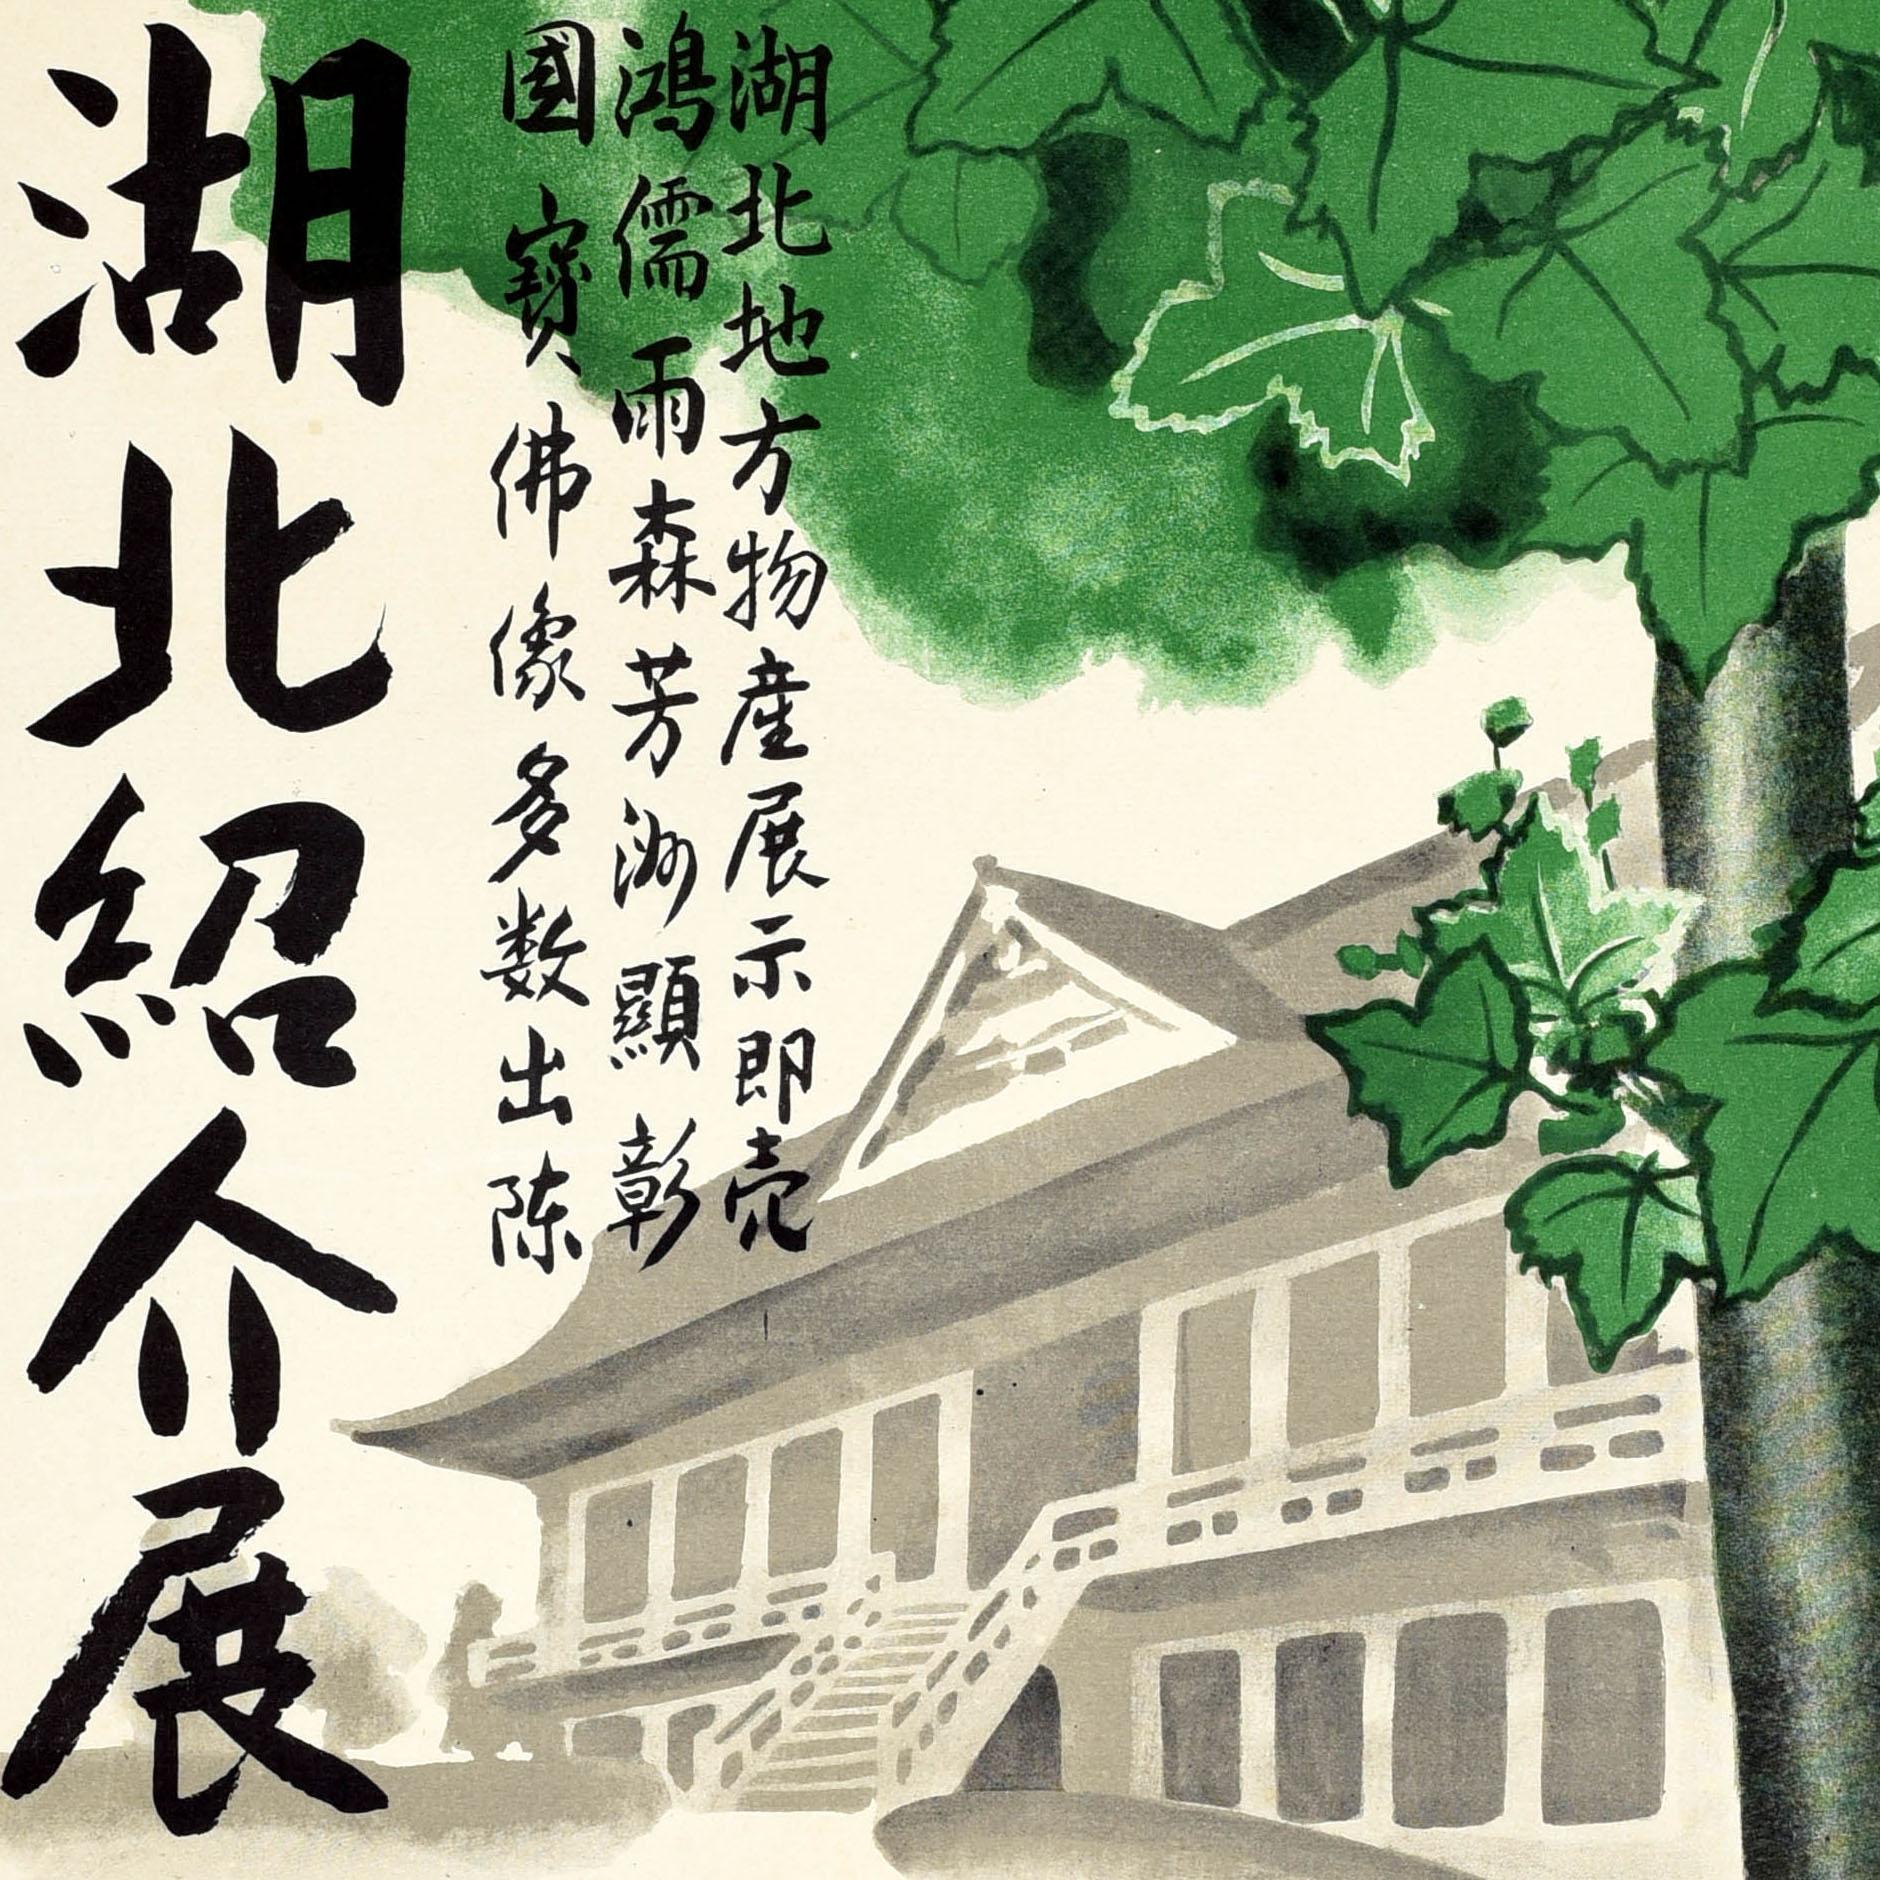 Original Vintage Advertising Poster Artifacts Exhibition Otsu Shiga Japan Design - Print by Unknown